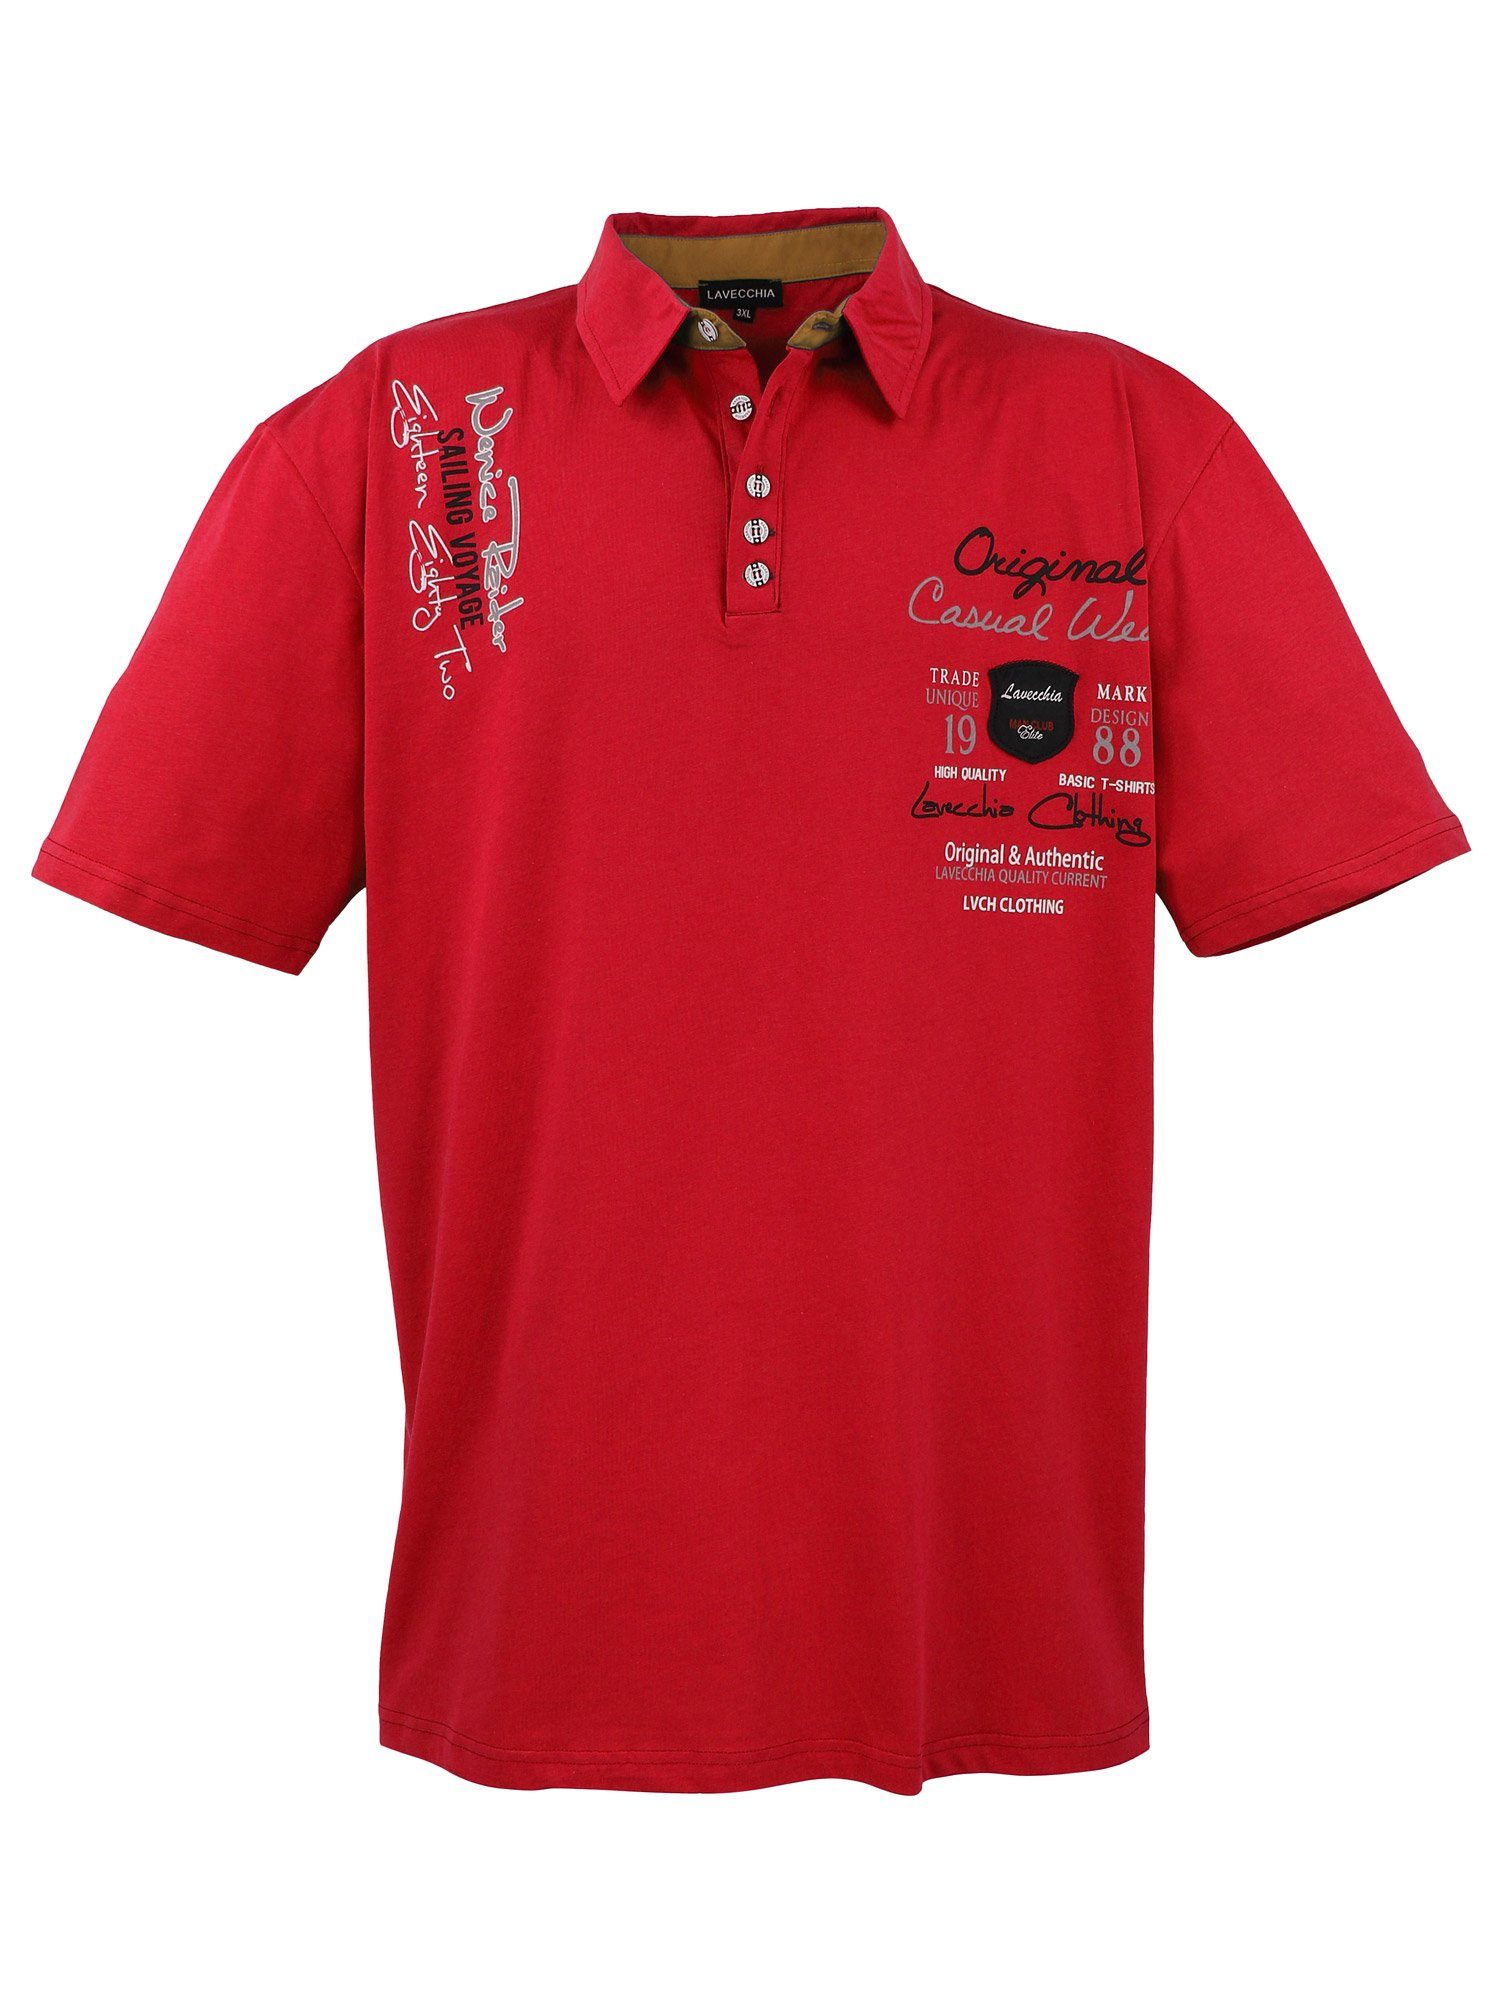 Lavecchia Poloshirt Übergrößen Herren Polo Shirt LV-610 Herren Polo Shirt rot